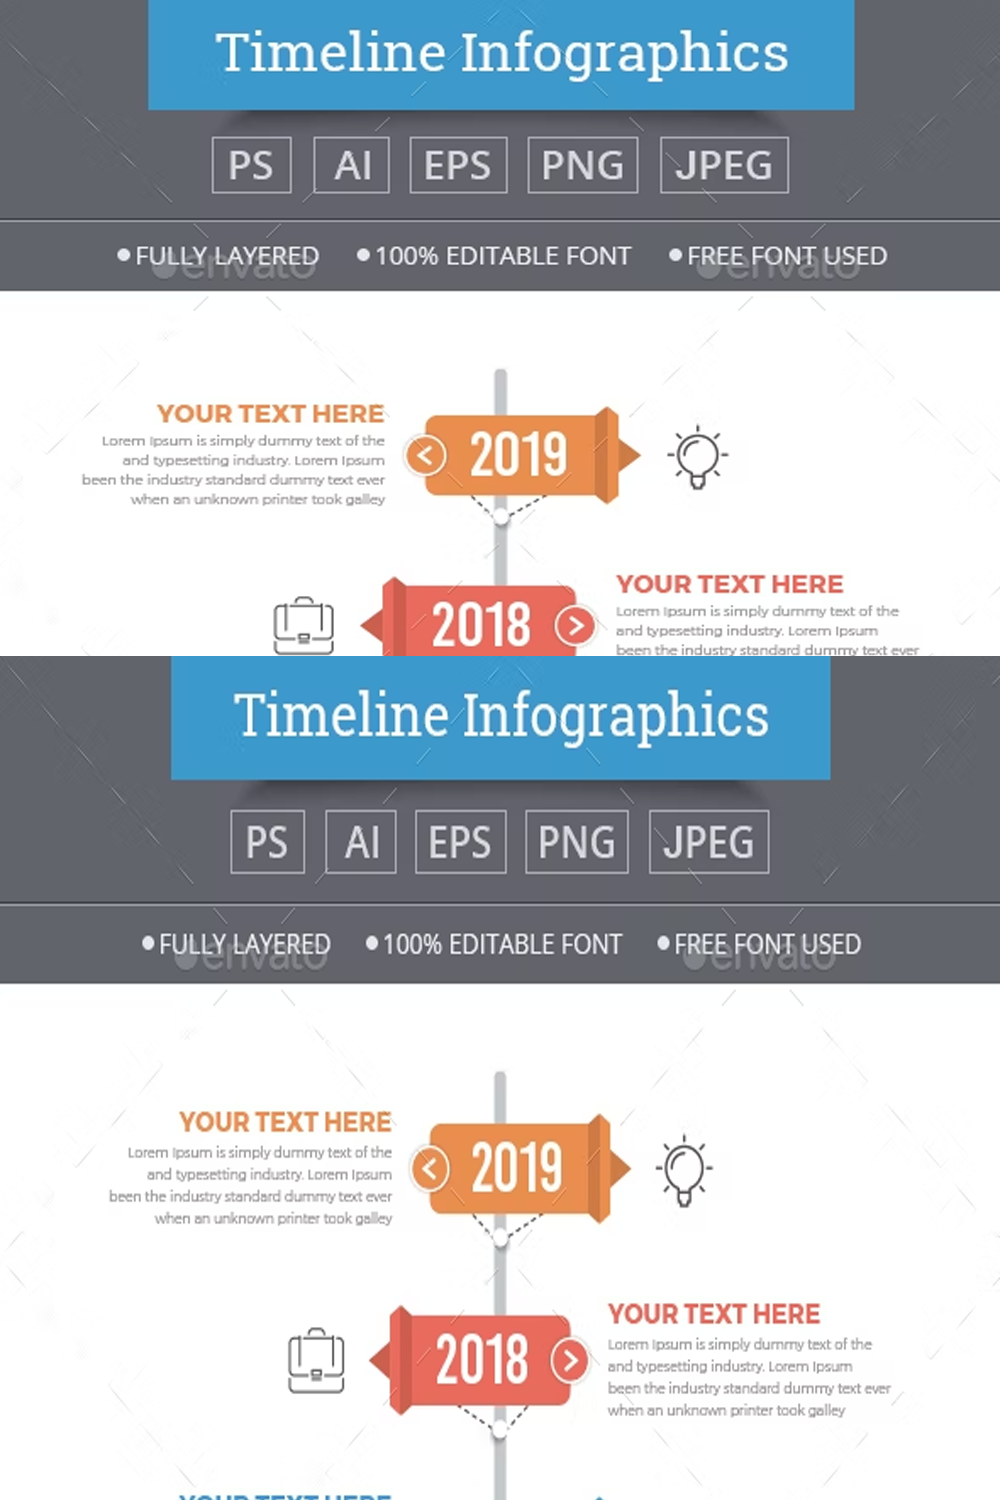 Illustrations vertical timeline infographics of pinterest.